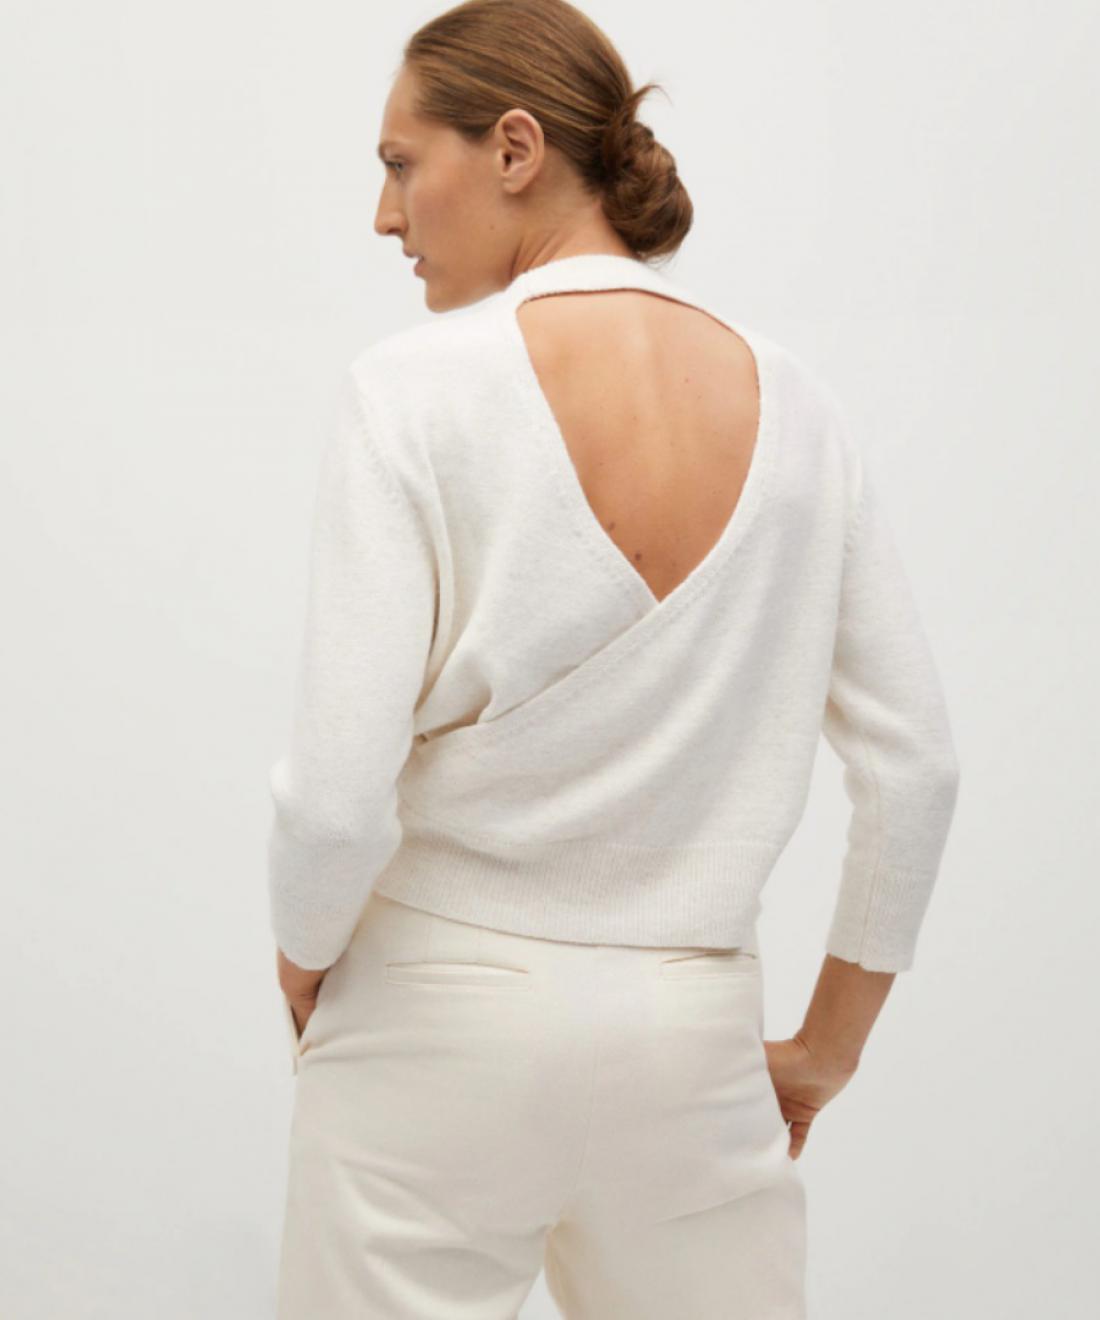 Bel pulover z izrezanim hrbtom, Mango outlet, 25,99€